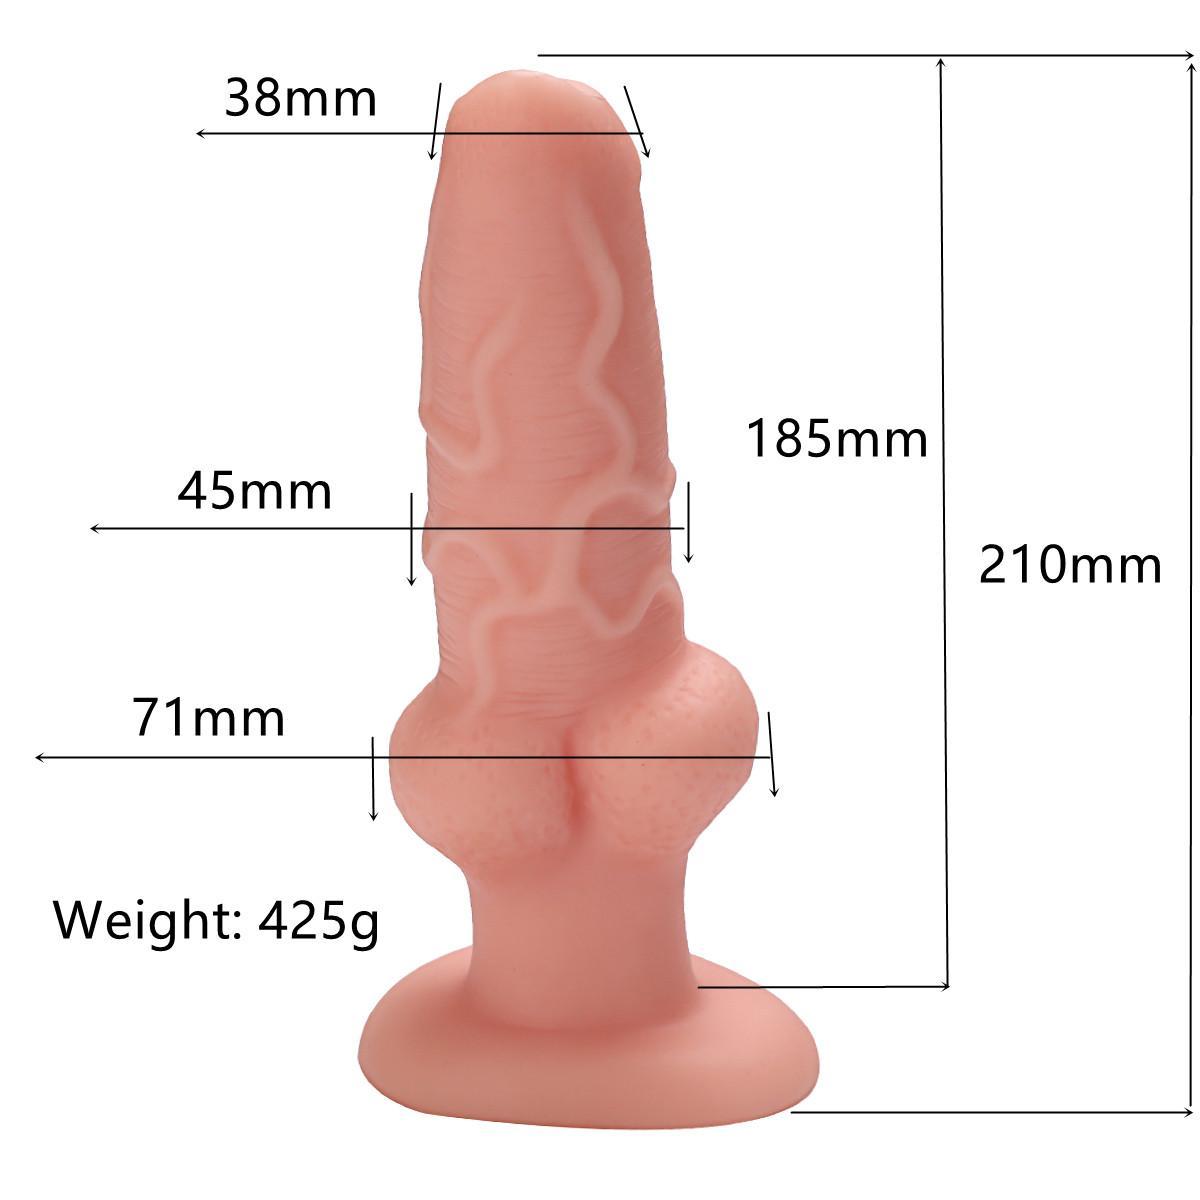 Dummy penis, animal simulation penis, female masturbation adult toy dildo wl237